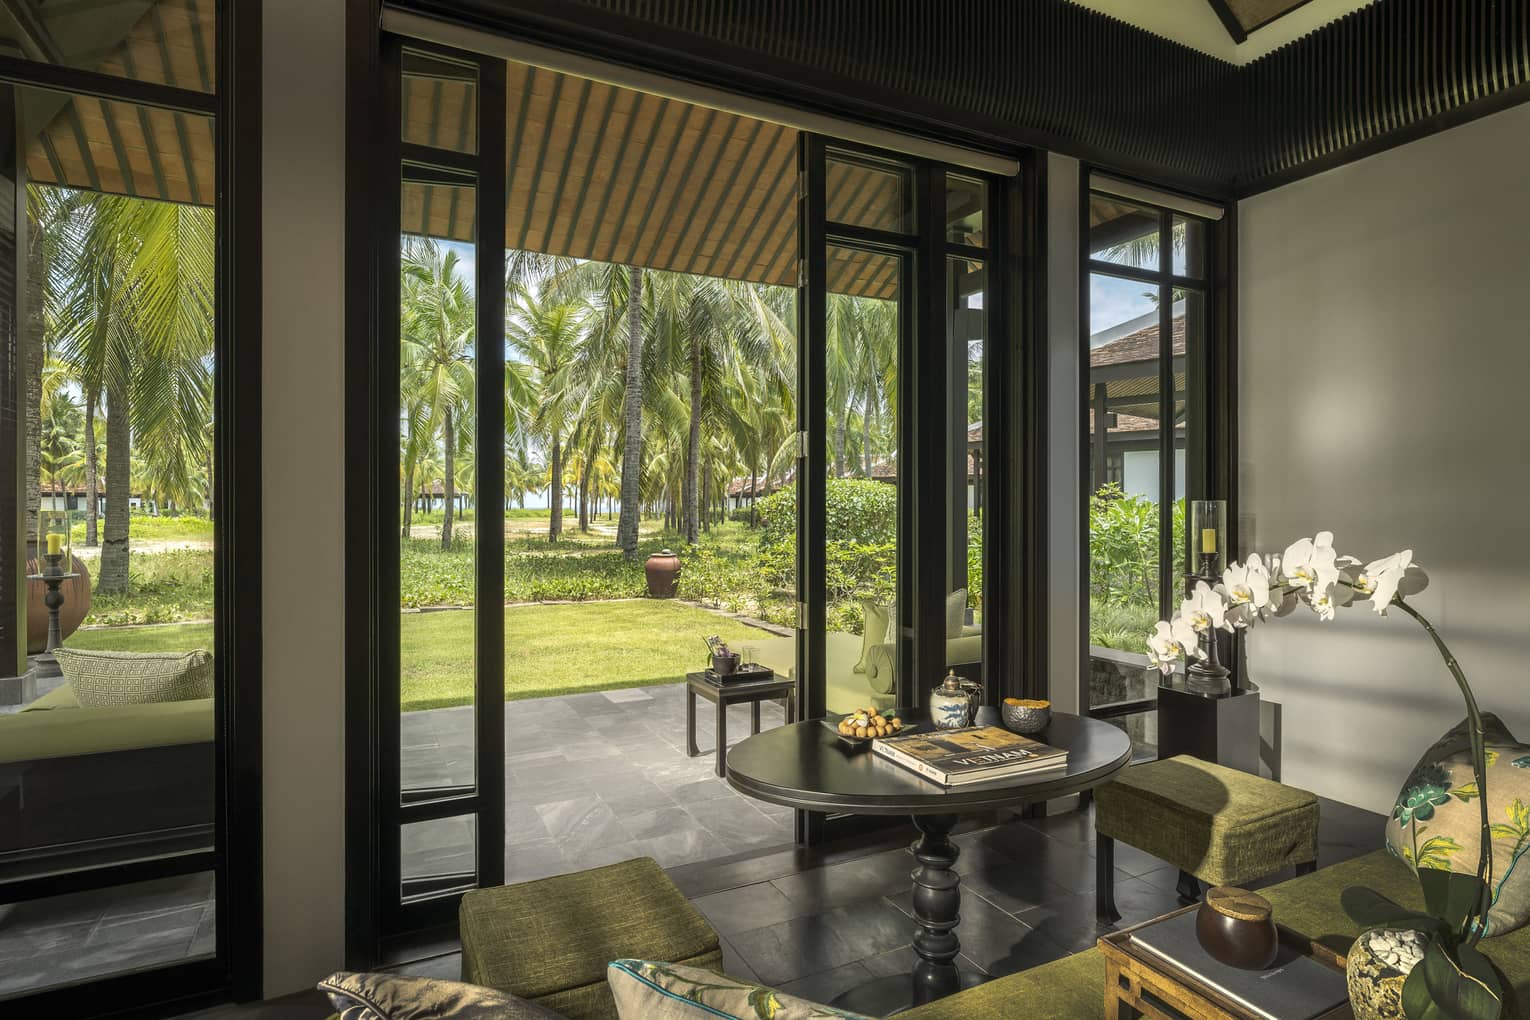 Family Villa living area opening on stone floor veranda with palm tree views